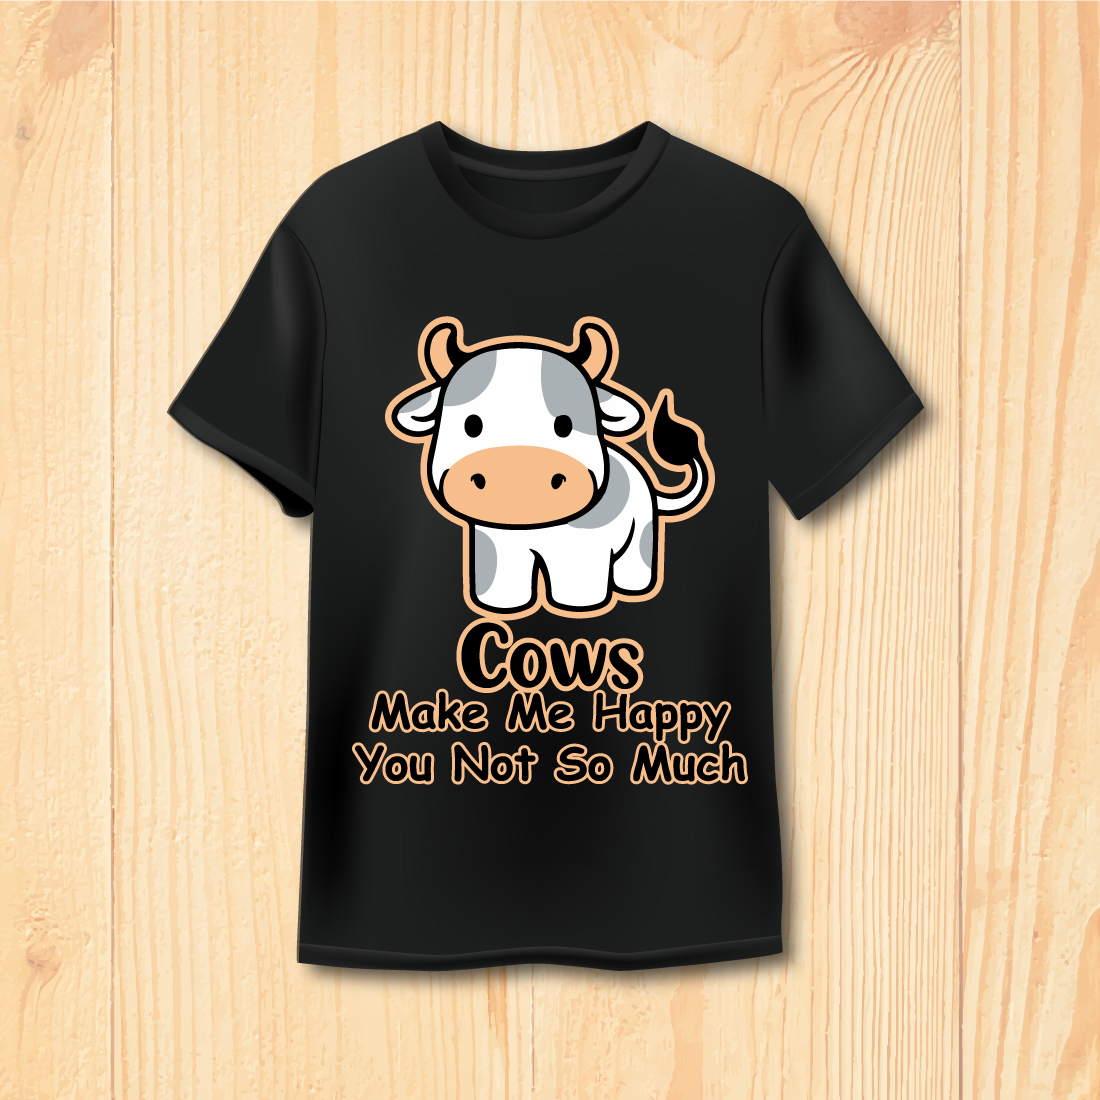 cow t shirt design 589